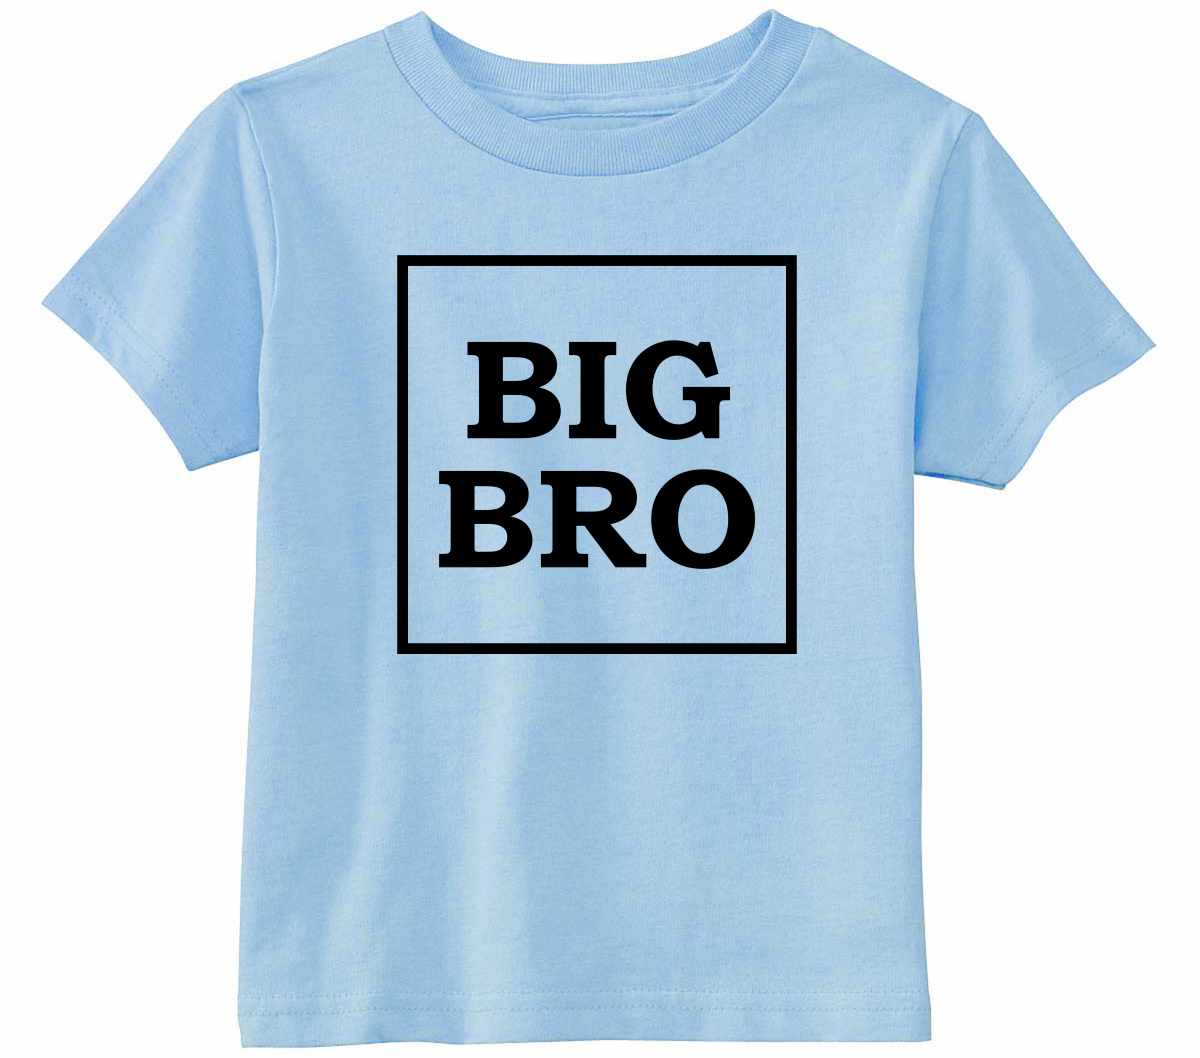 Big Bro on Infant-Toddler T-Shirt